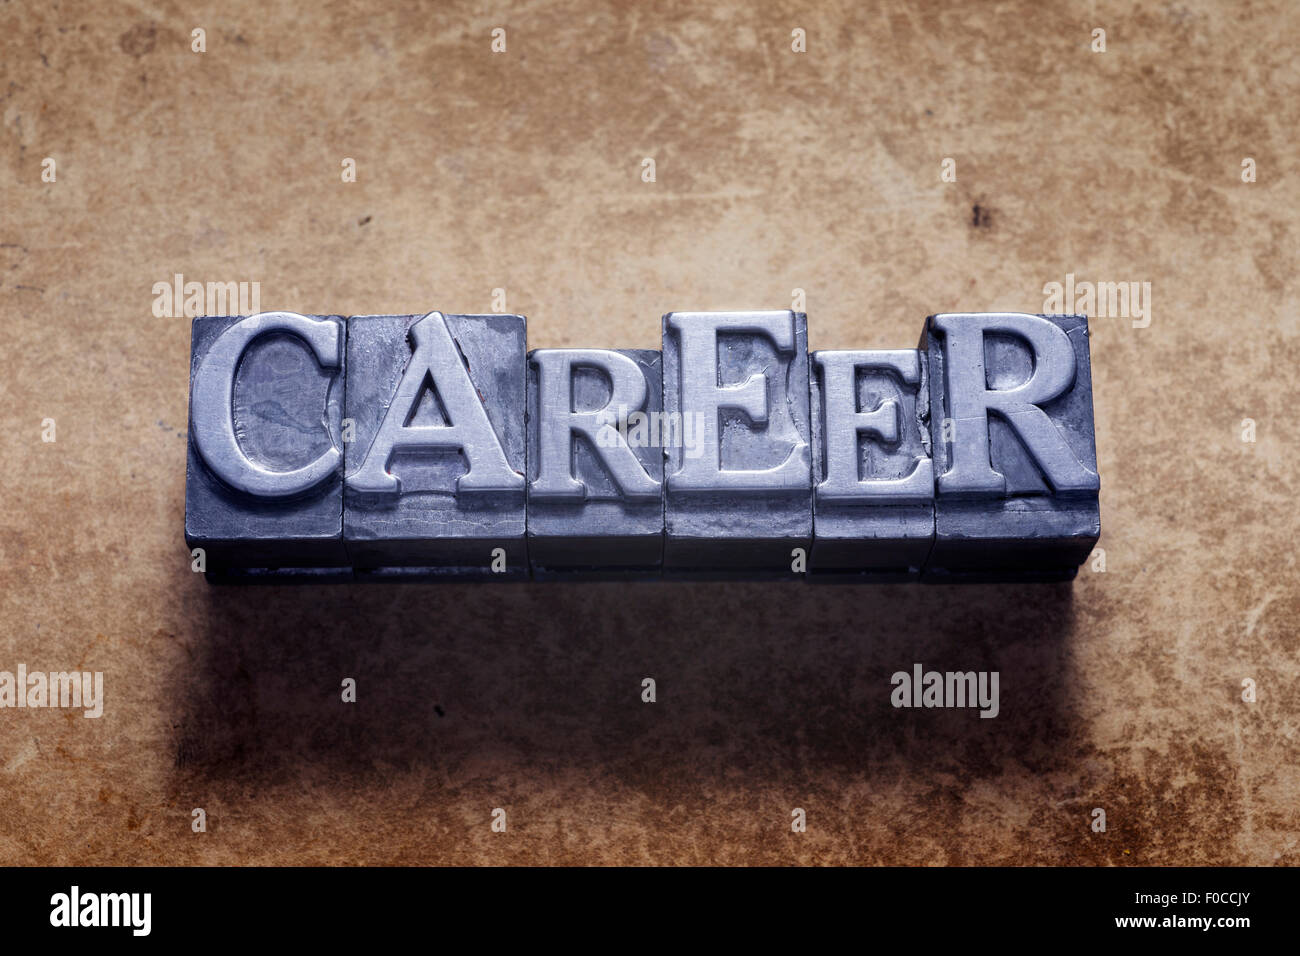 career word made from metallic letterpress type on vintage cardboard Stock Photo